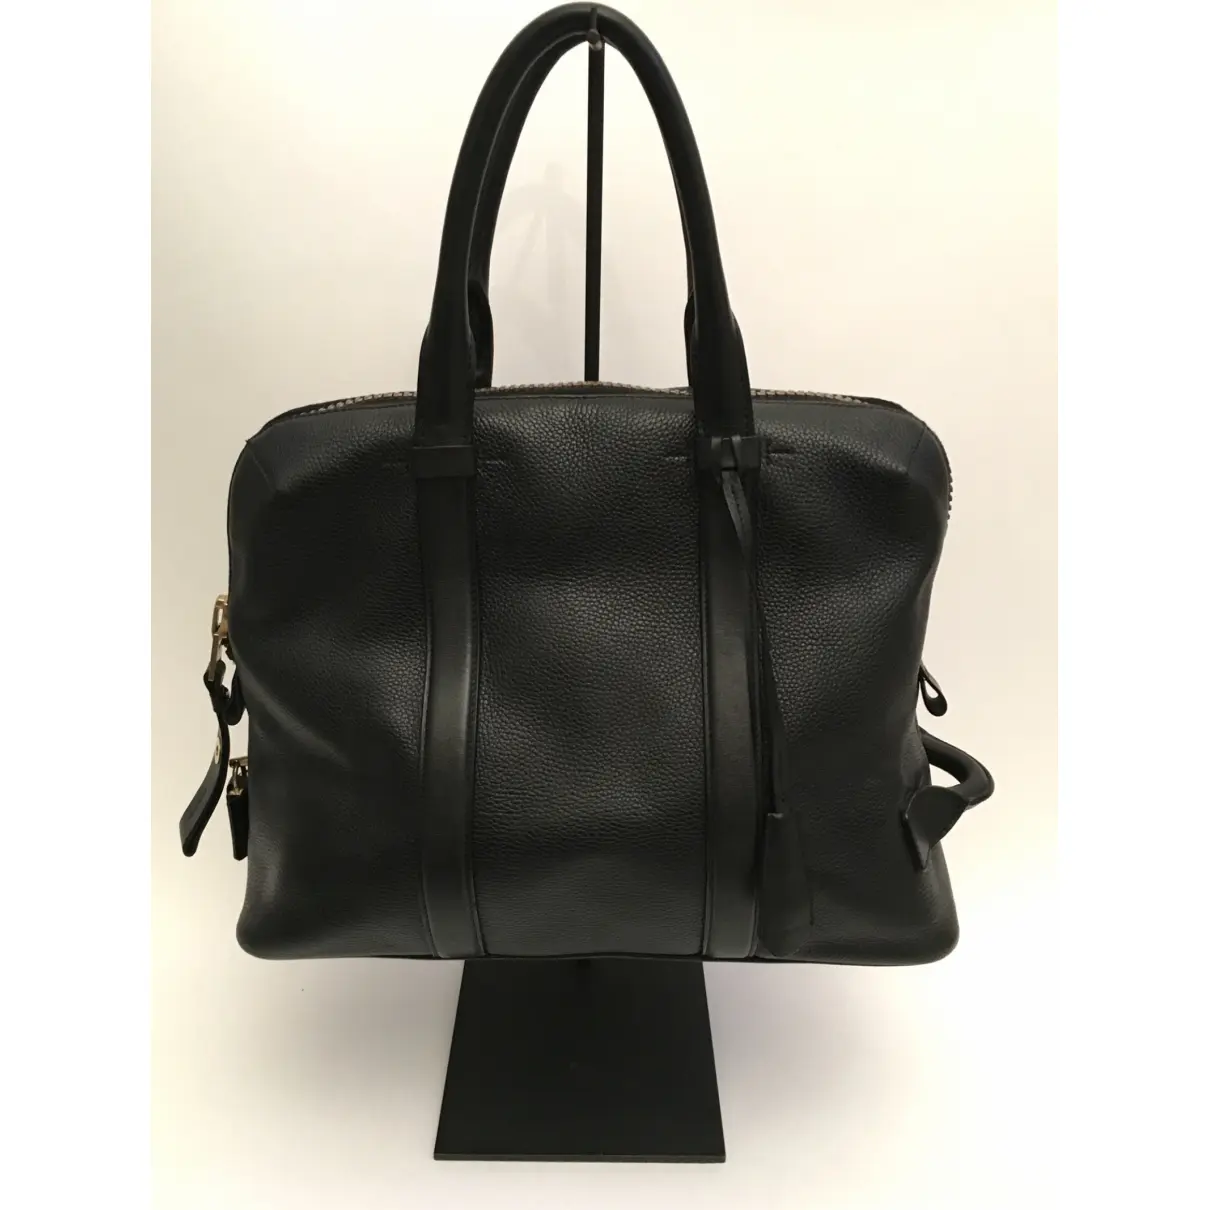 Buy Tom Ford Leather weekend bag online